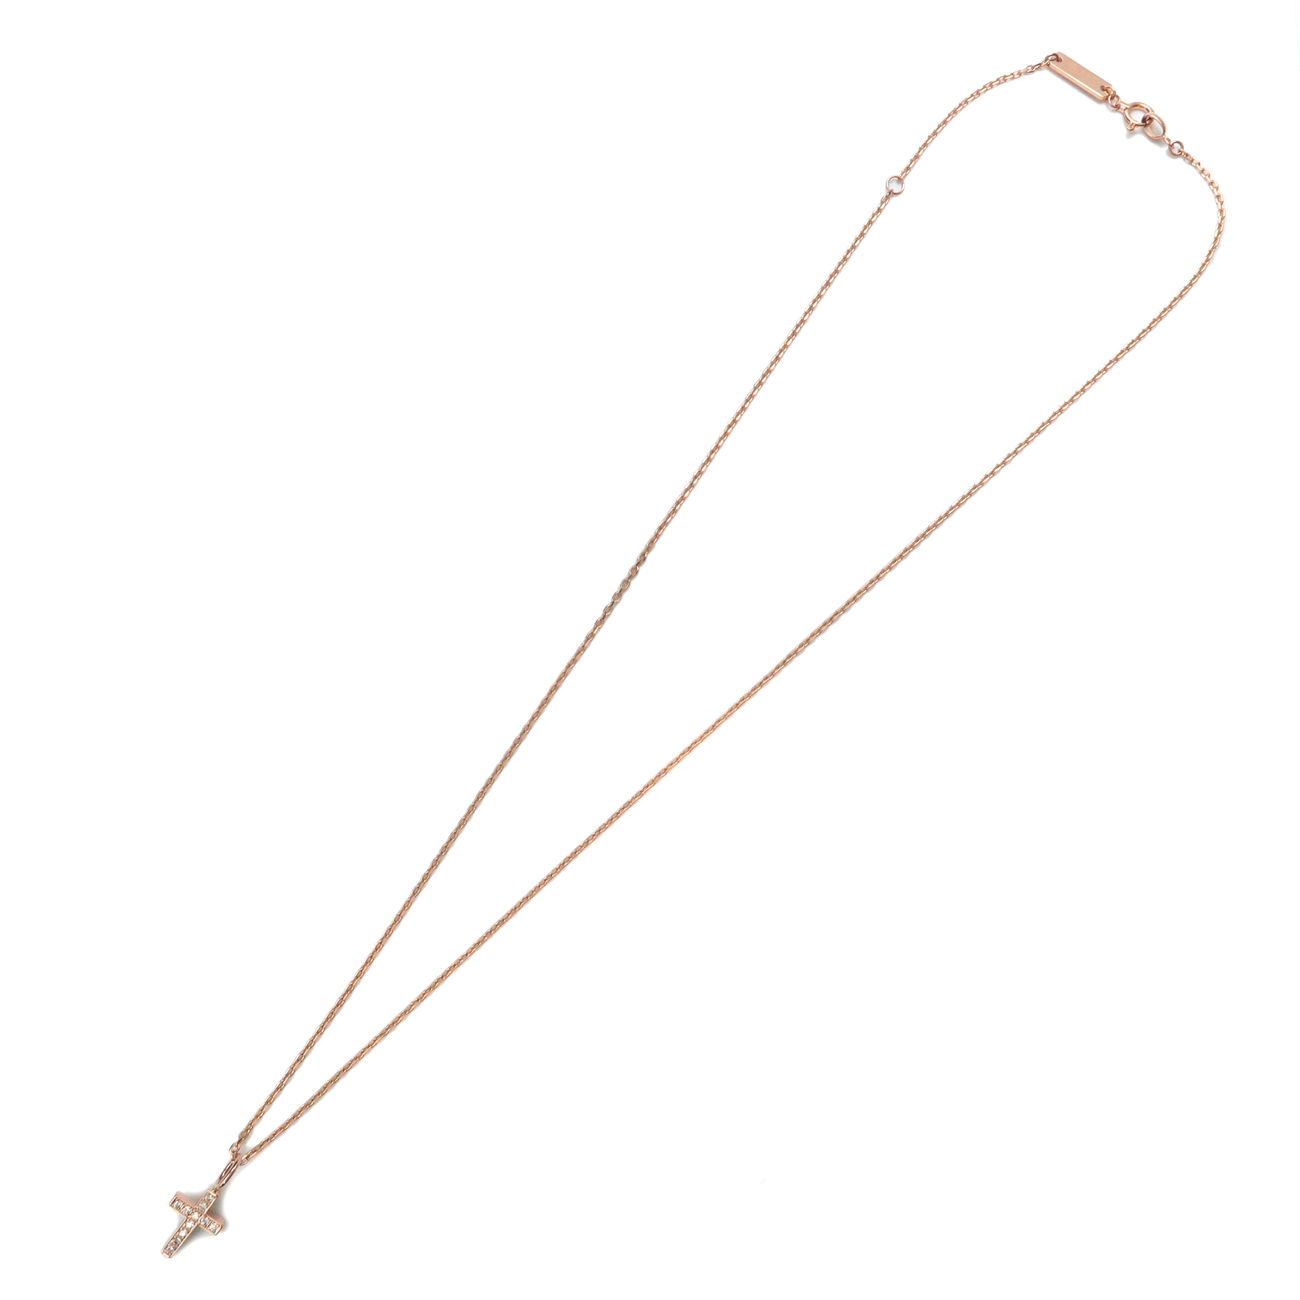 SJX-Cross-Diamond-Necklace-0.07ct-K18PG-750PG-Rose-Gold – dct